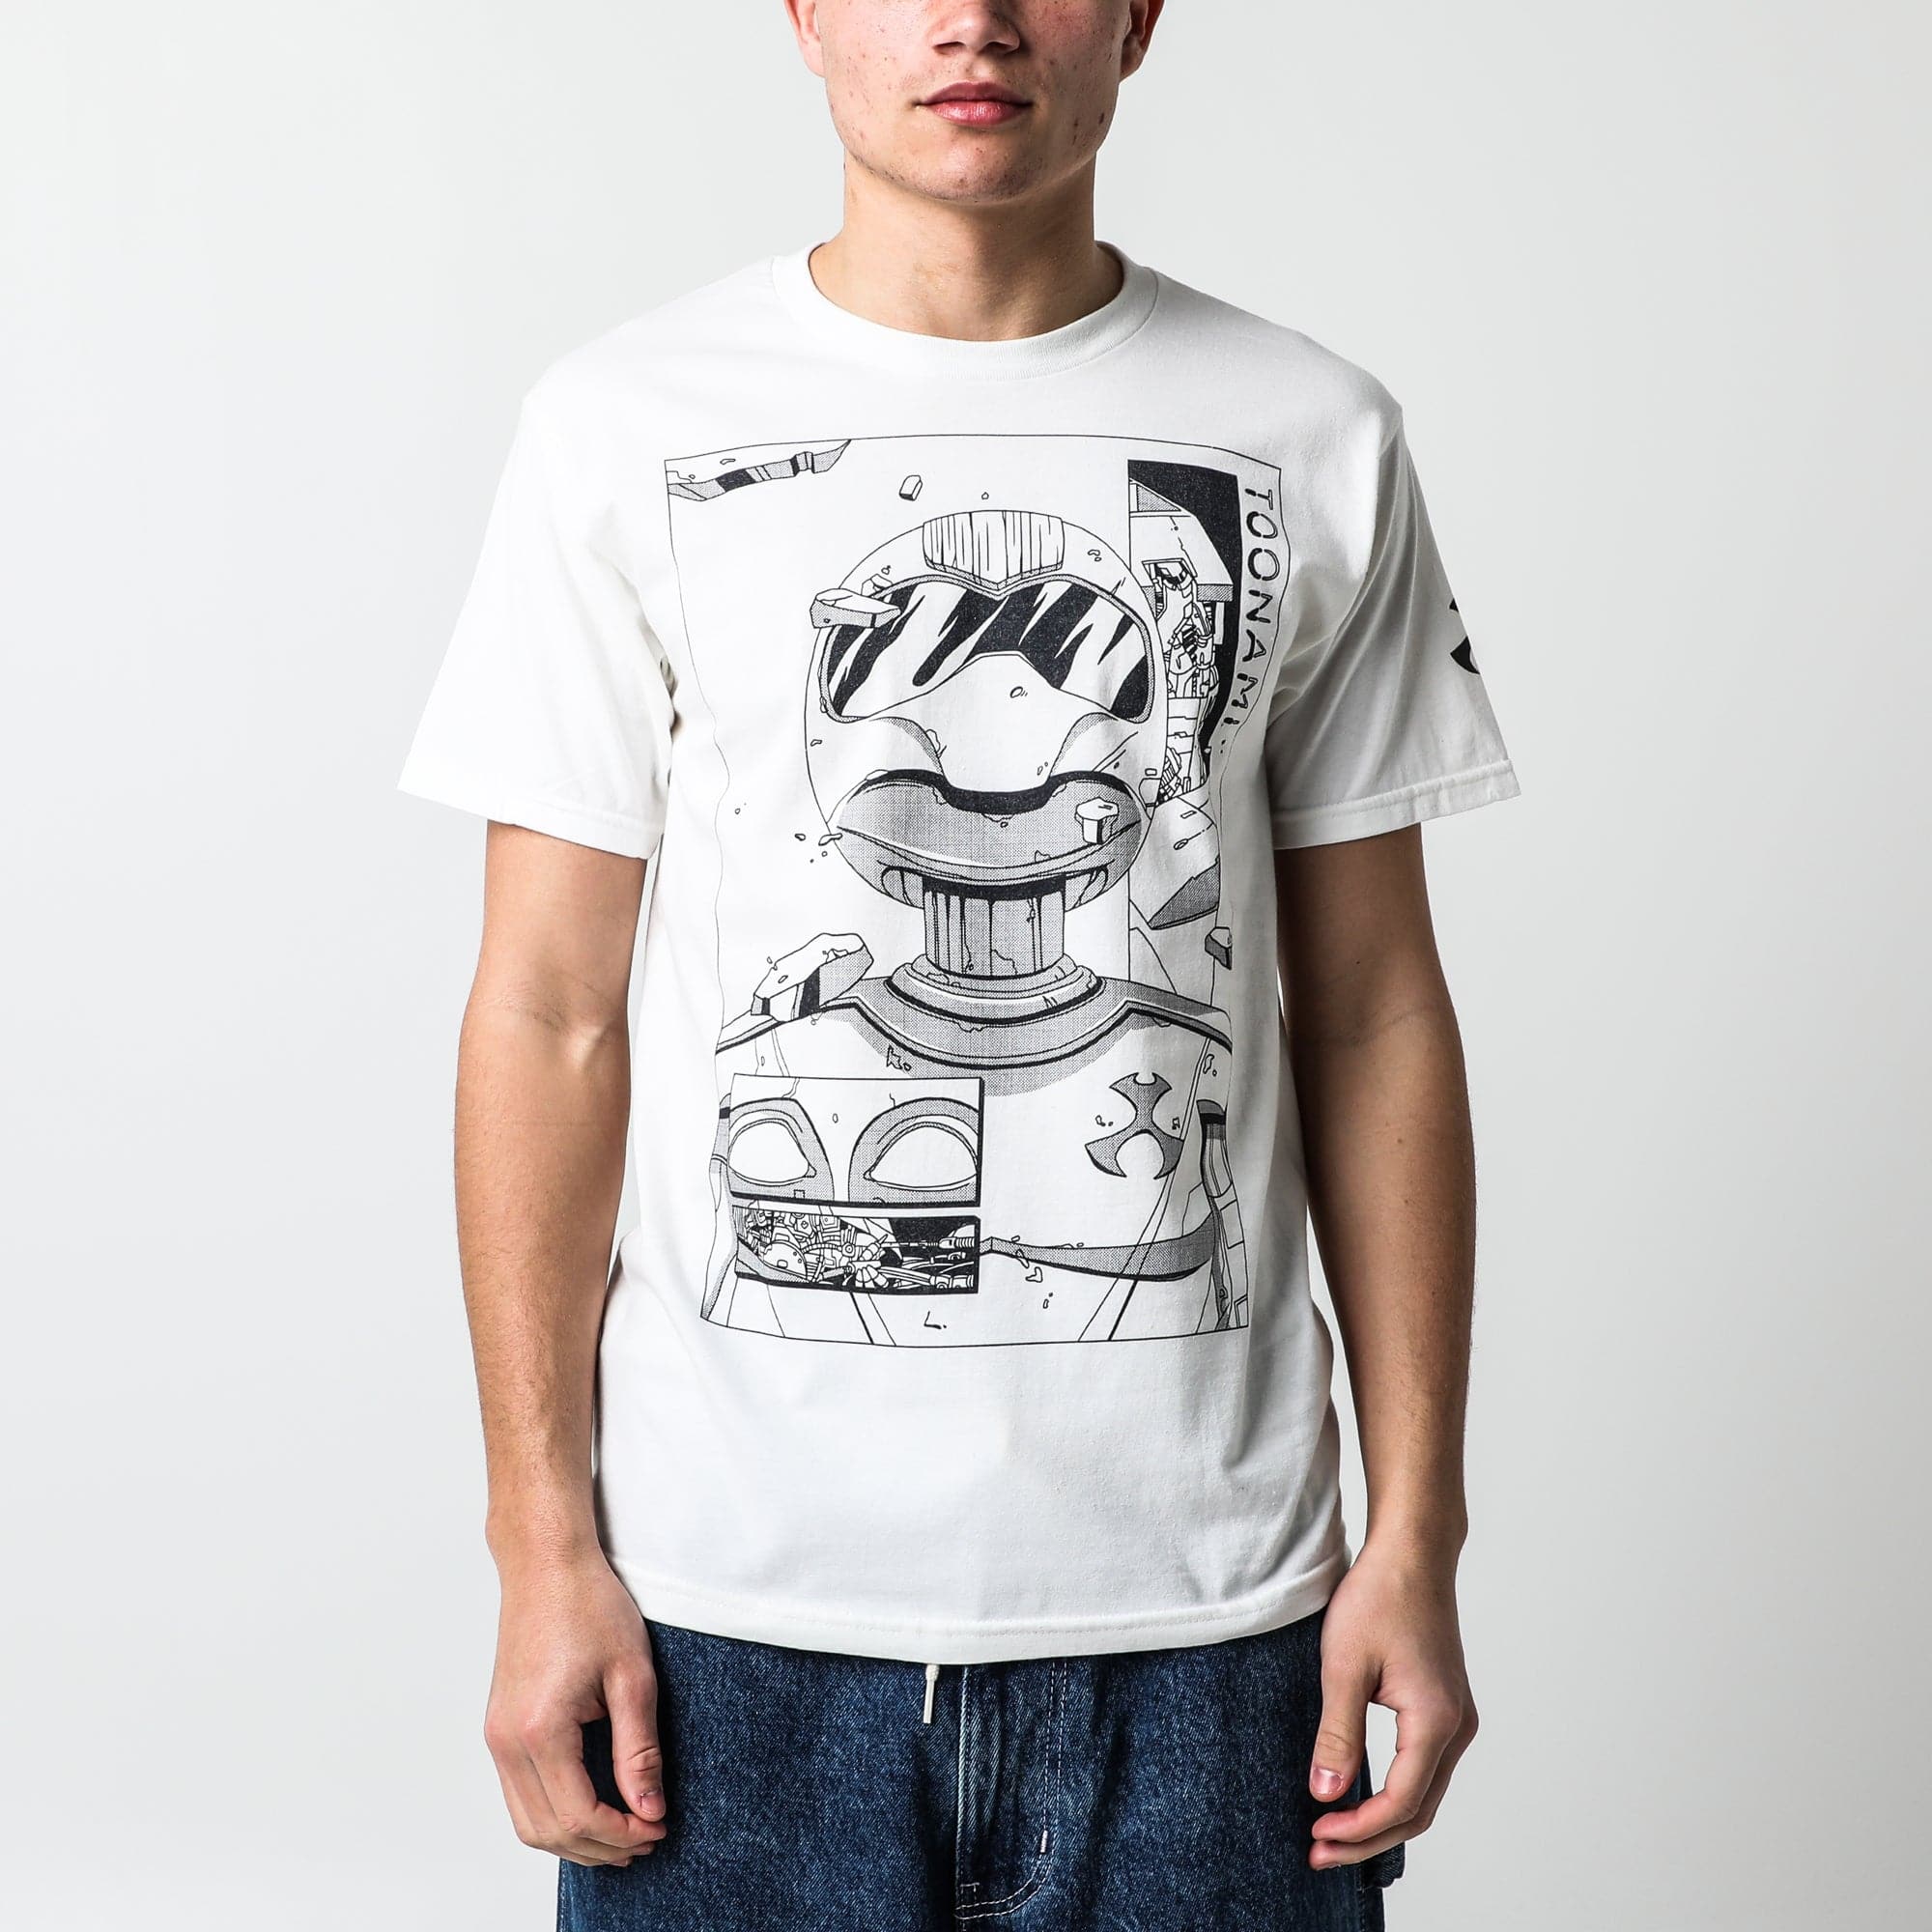 Mob Psycho 100 T-Shirt Size XXL Black Short Sleeve Crunchyroll - 100%  Cotton